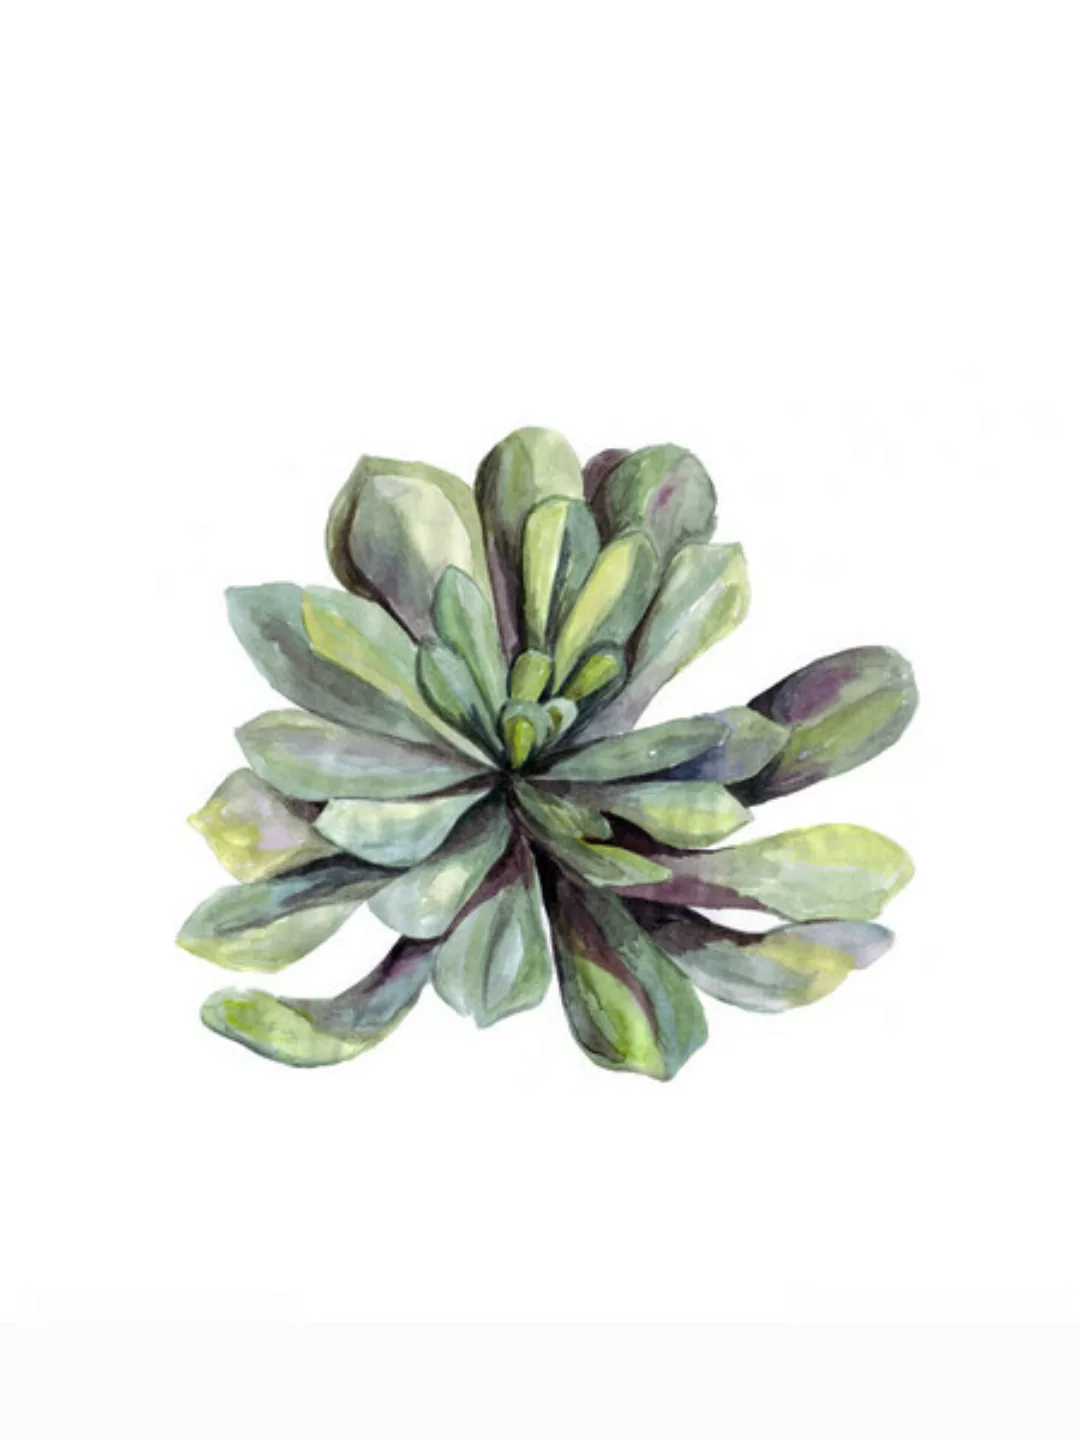 Poster / Leinwandbild - Mantika Botanical Succulent günstig online kaufen